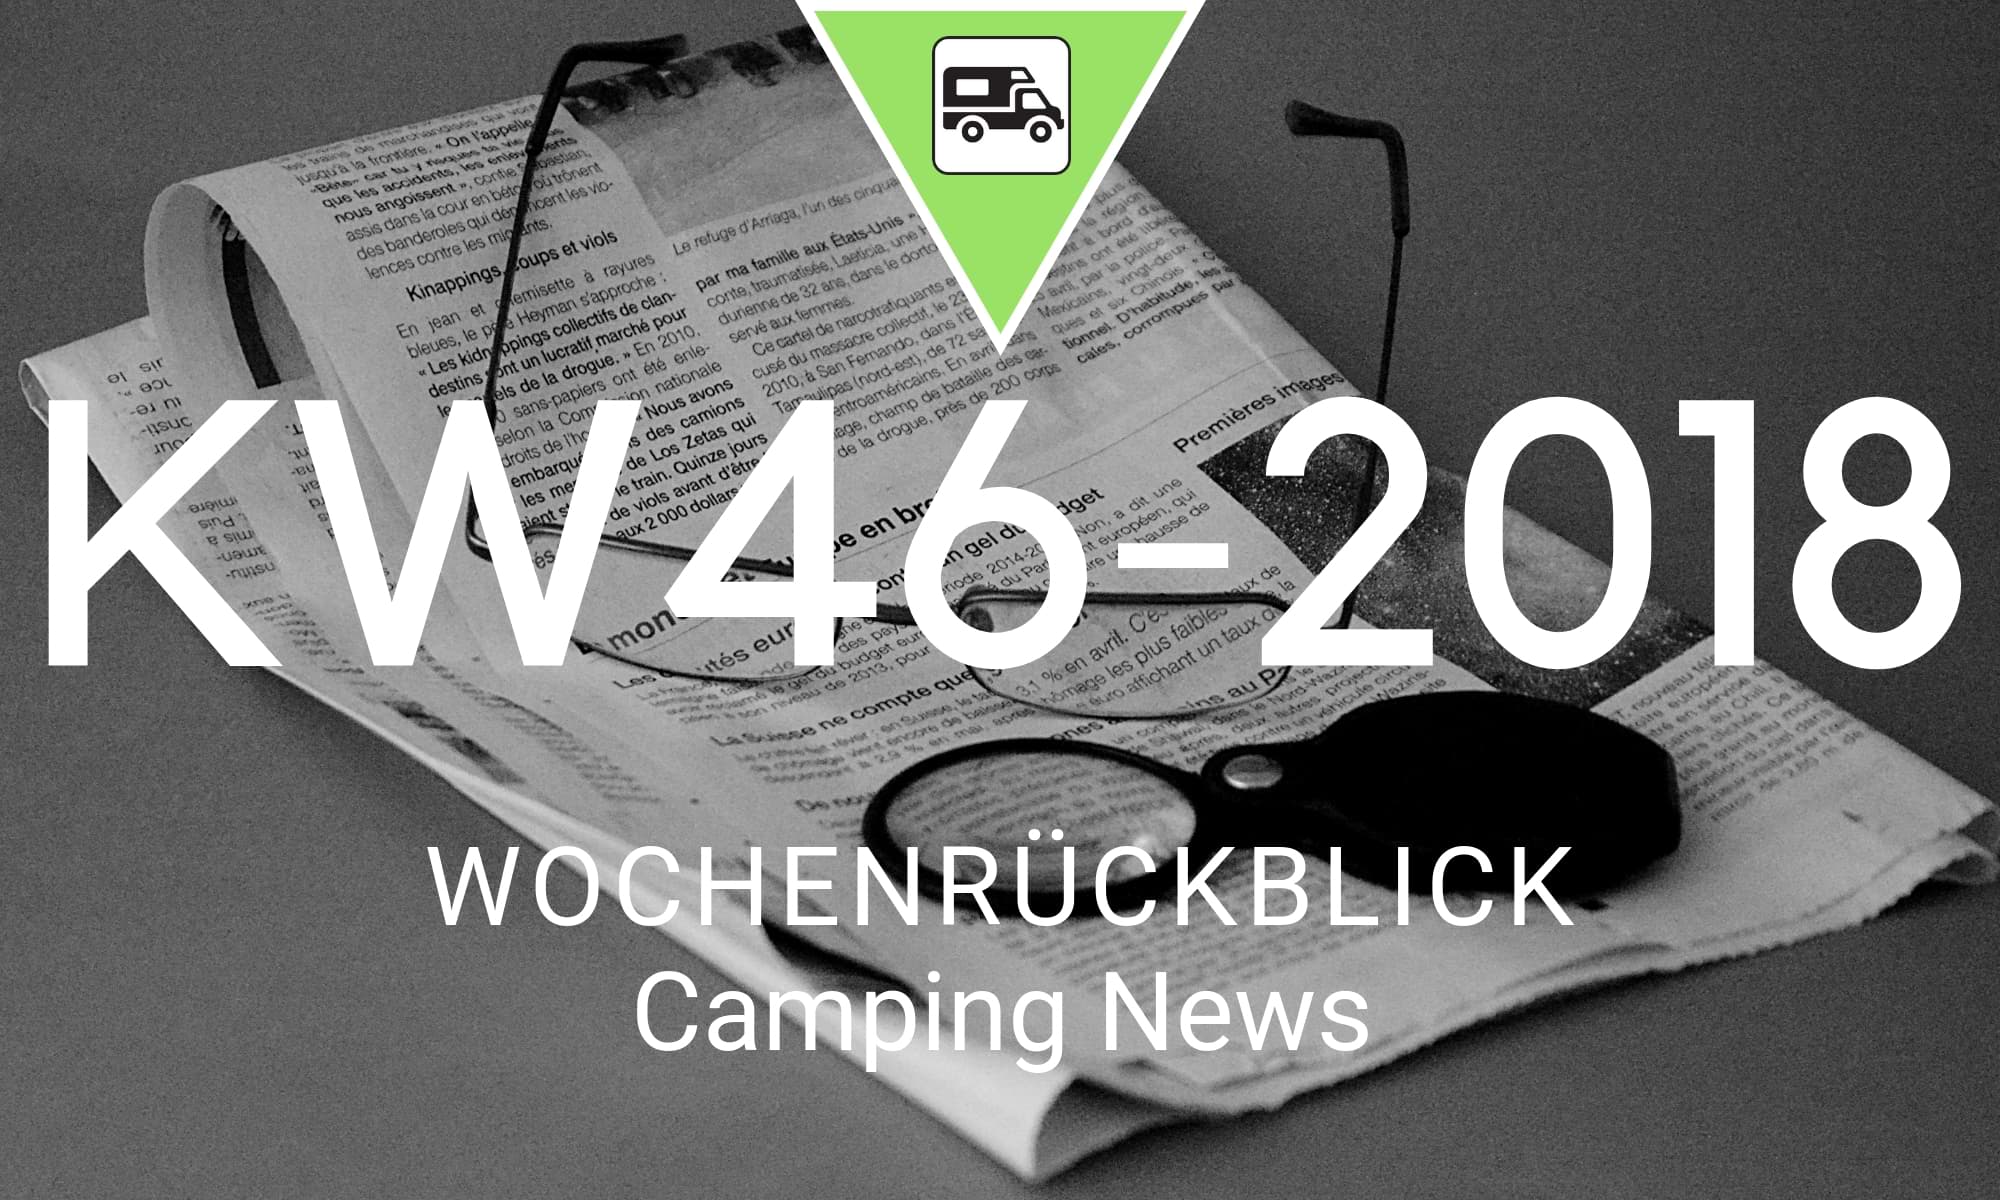 Wochenrückblick Camping News KW46-2018